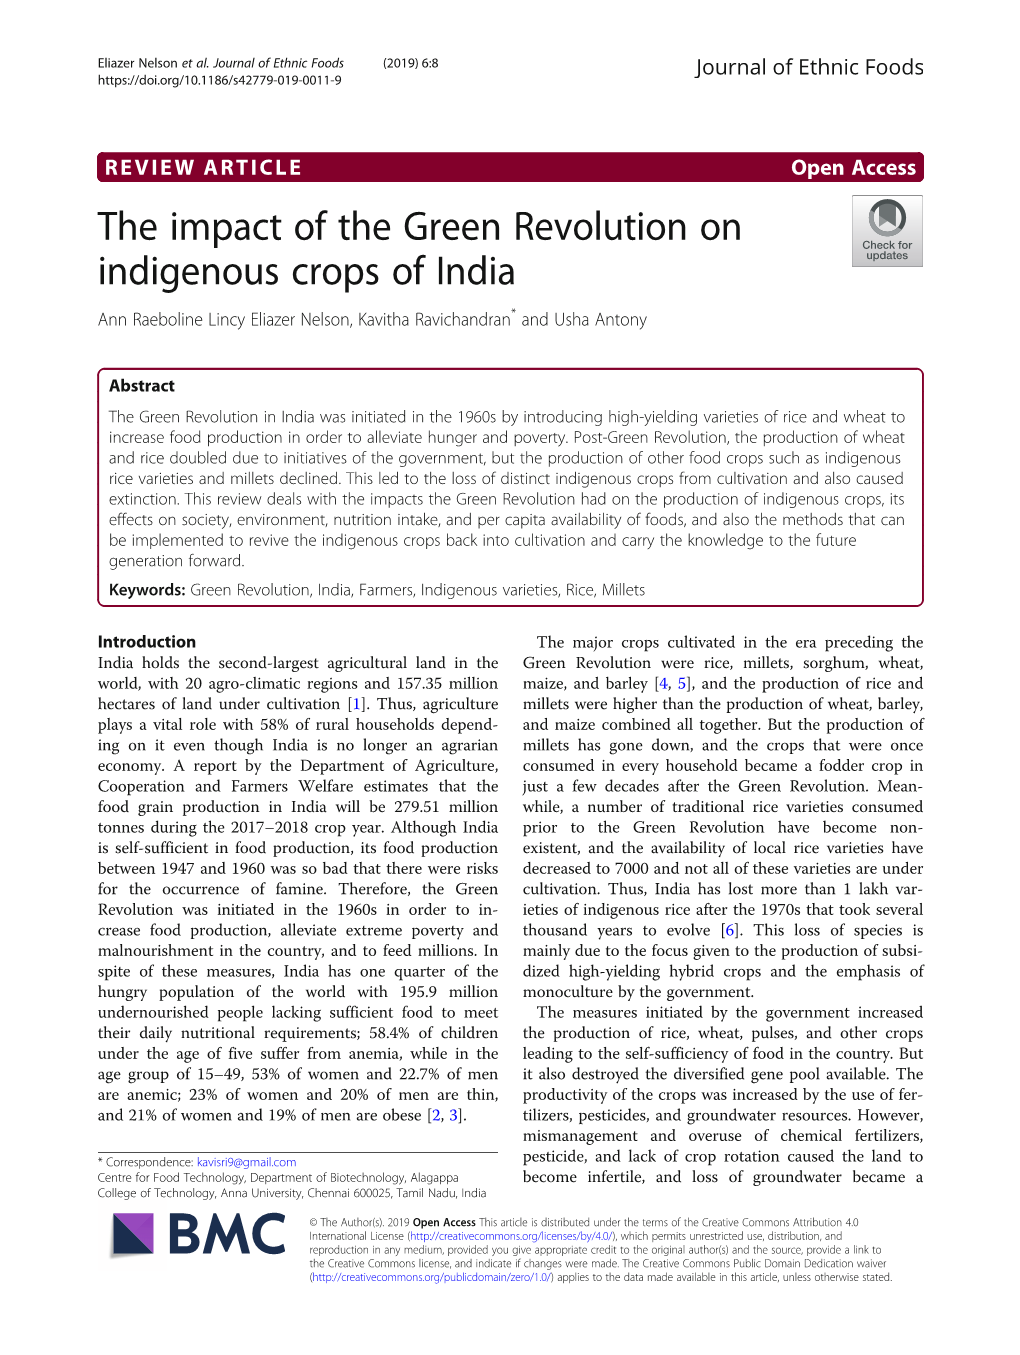 The Impact of the Green Revolution on Indigenous Crops of India Ann Raeboline Lincy Eliazer Nelson, Kavitha Ravichandran* and Usha Antony